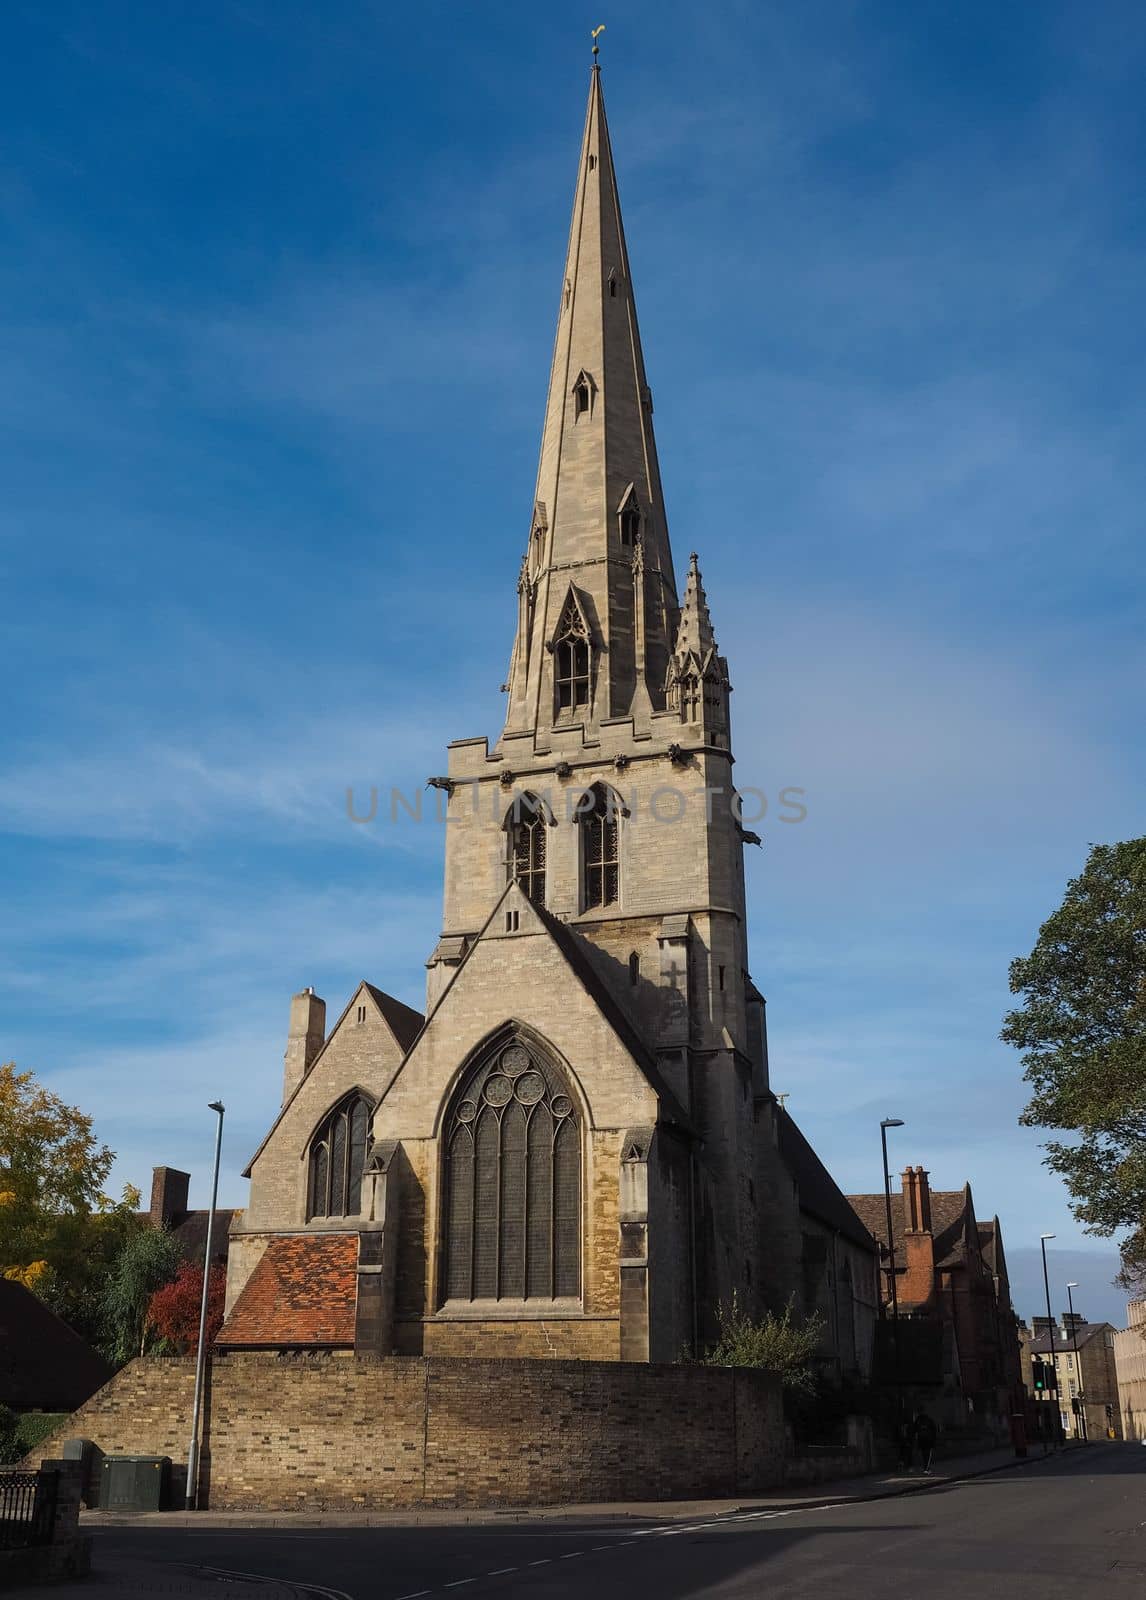 All Saints gothic church in Cambridge, UK